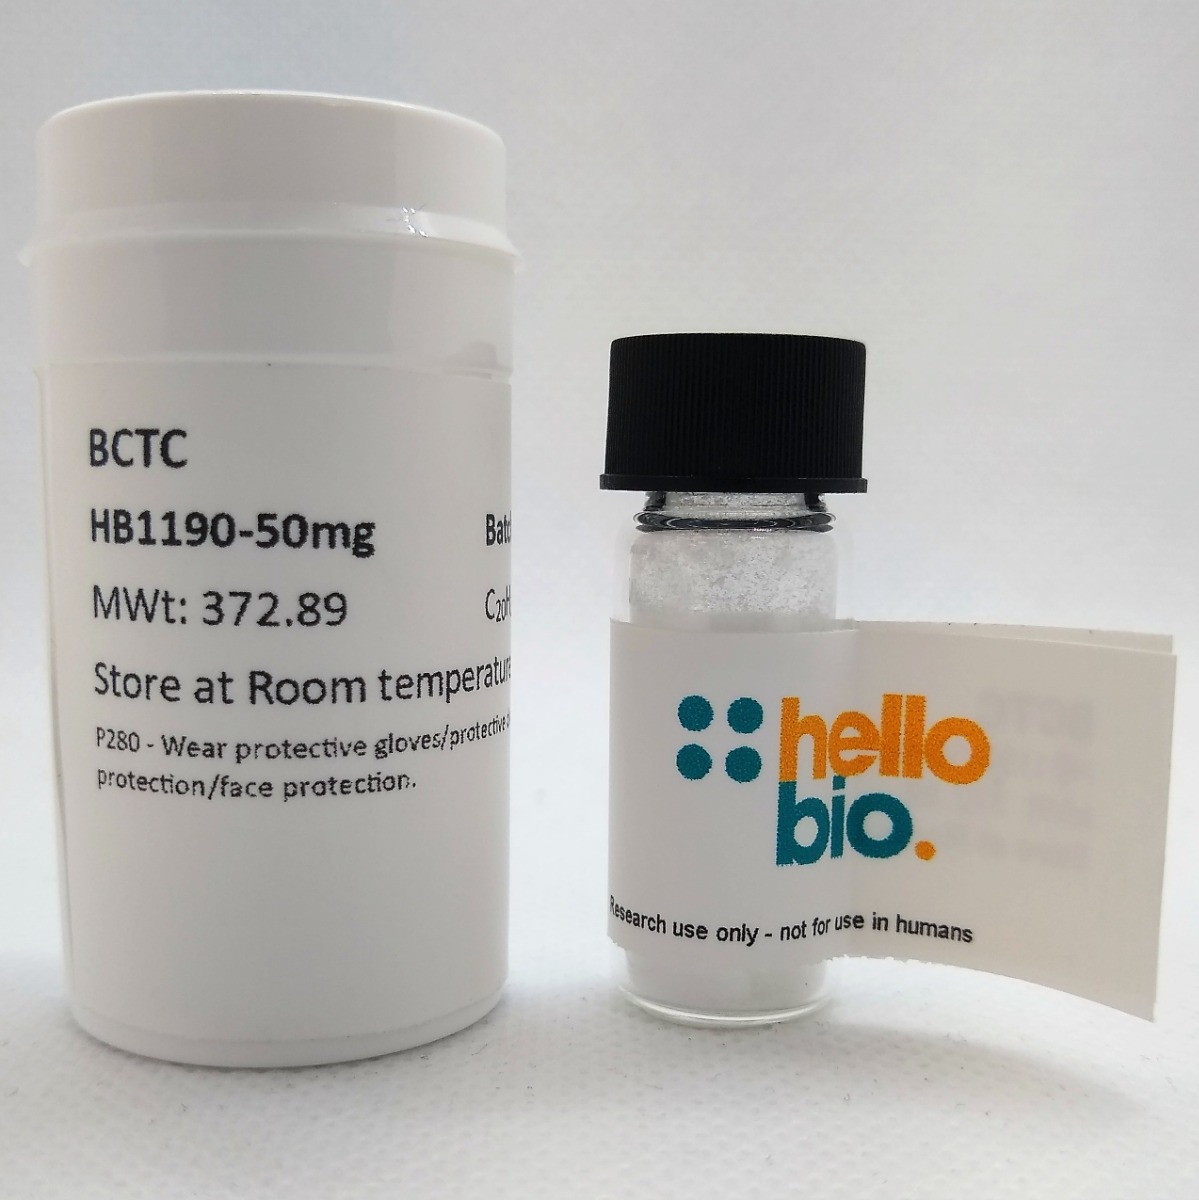 BCTC product vial image | Hello Bio